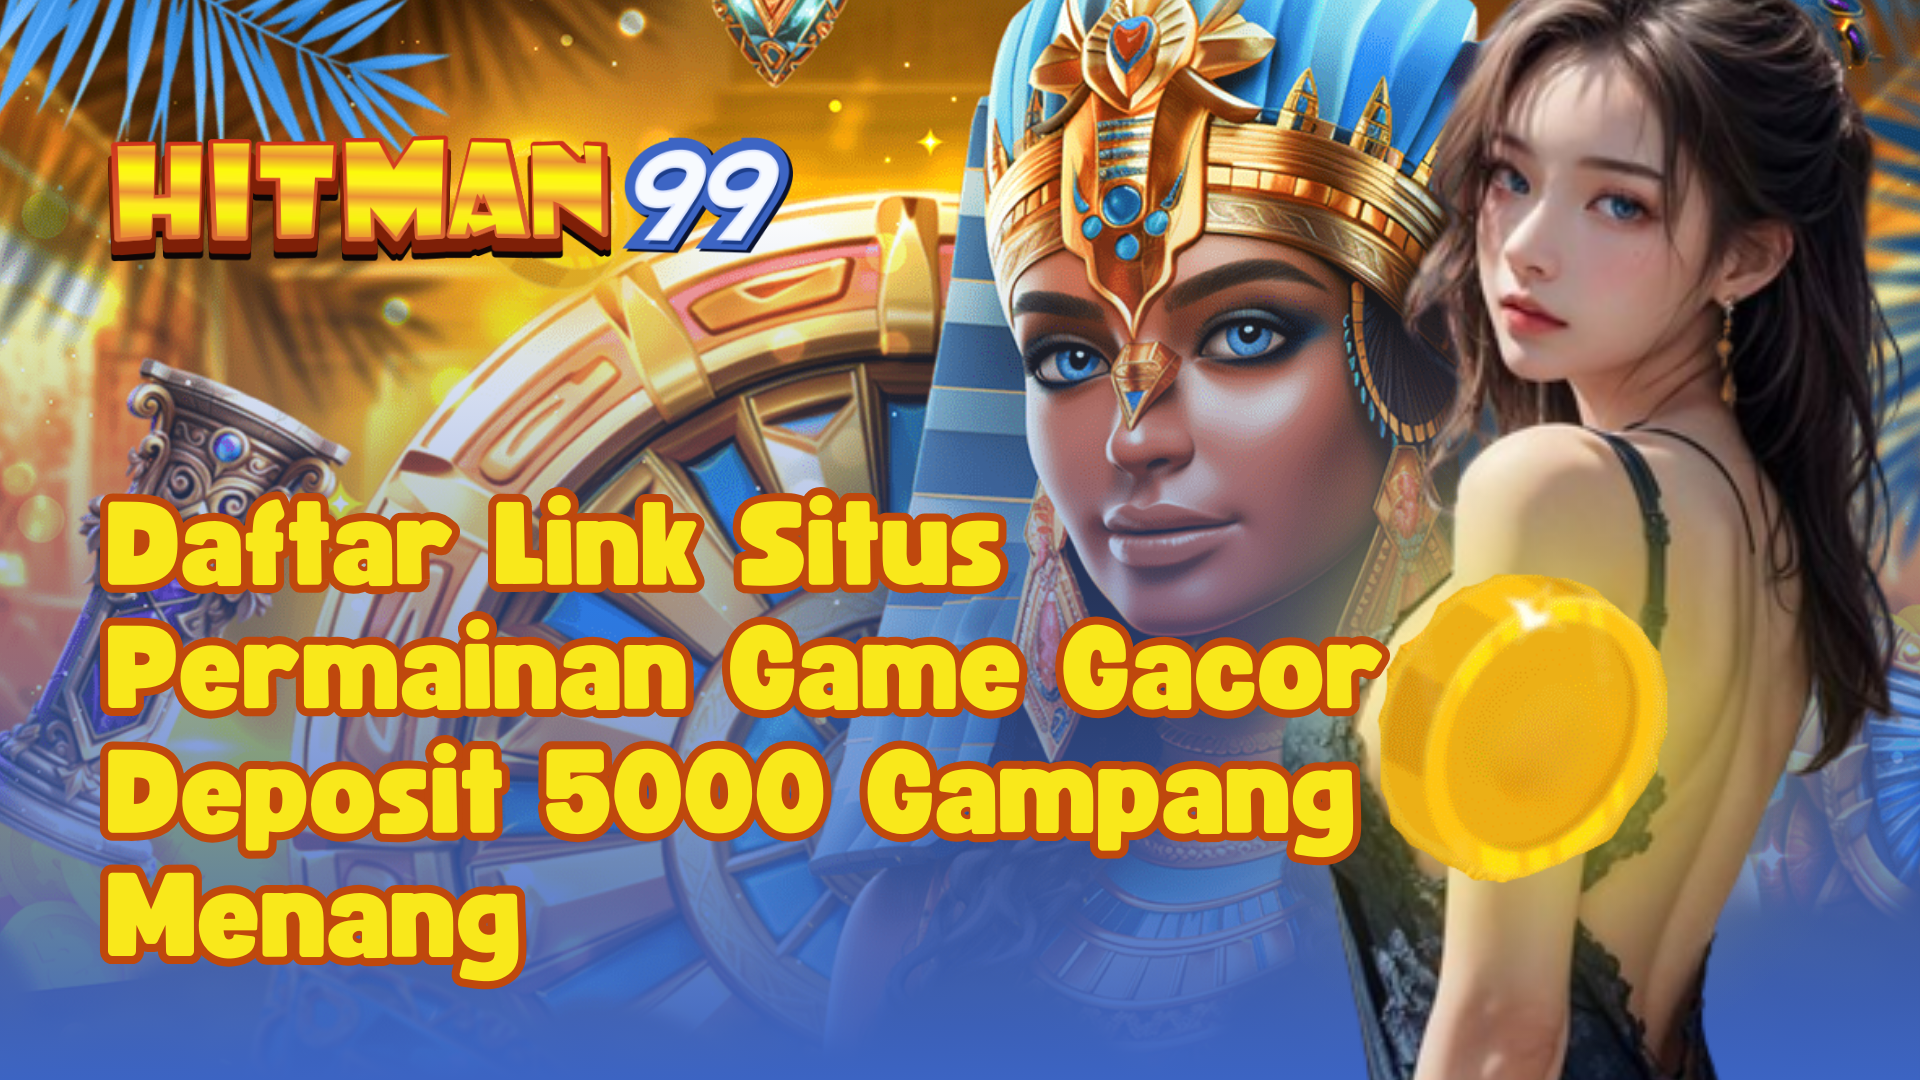 Daftar Link Situs Permainan Game Gacor Deposit 5000 Gampang Menang